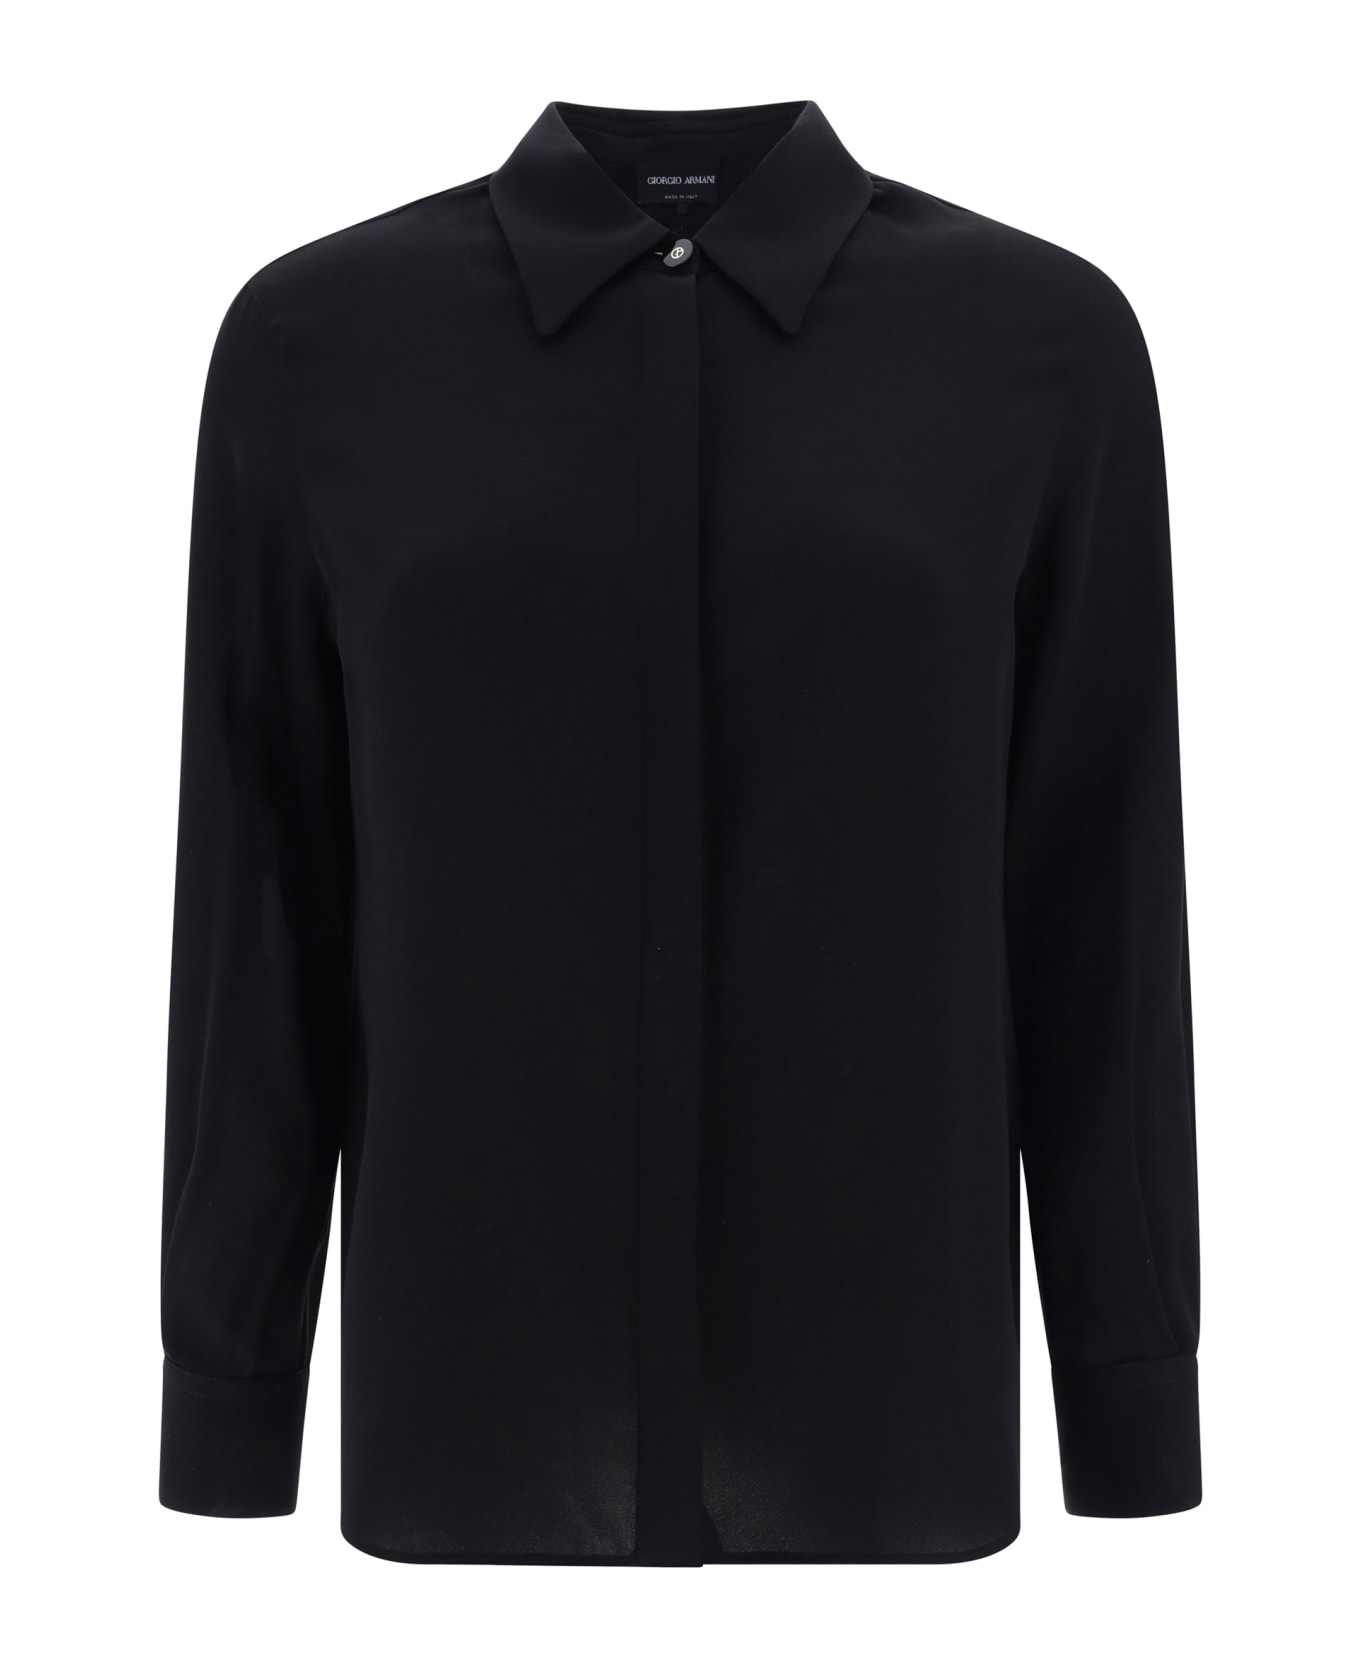 Giorgio Armani Shirt - Black Beauty シャツ